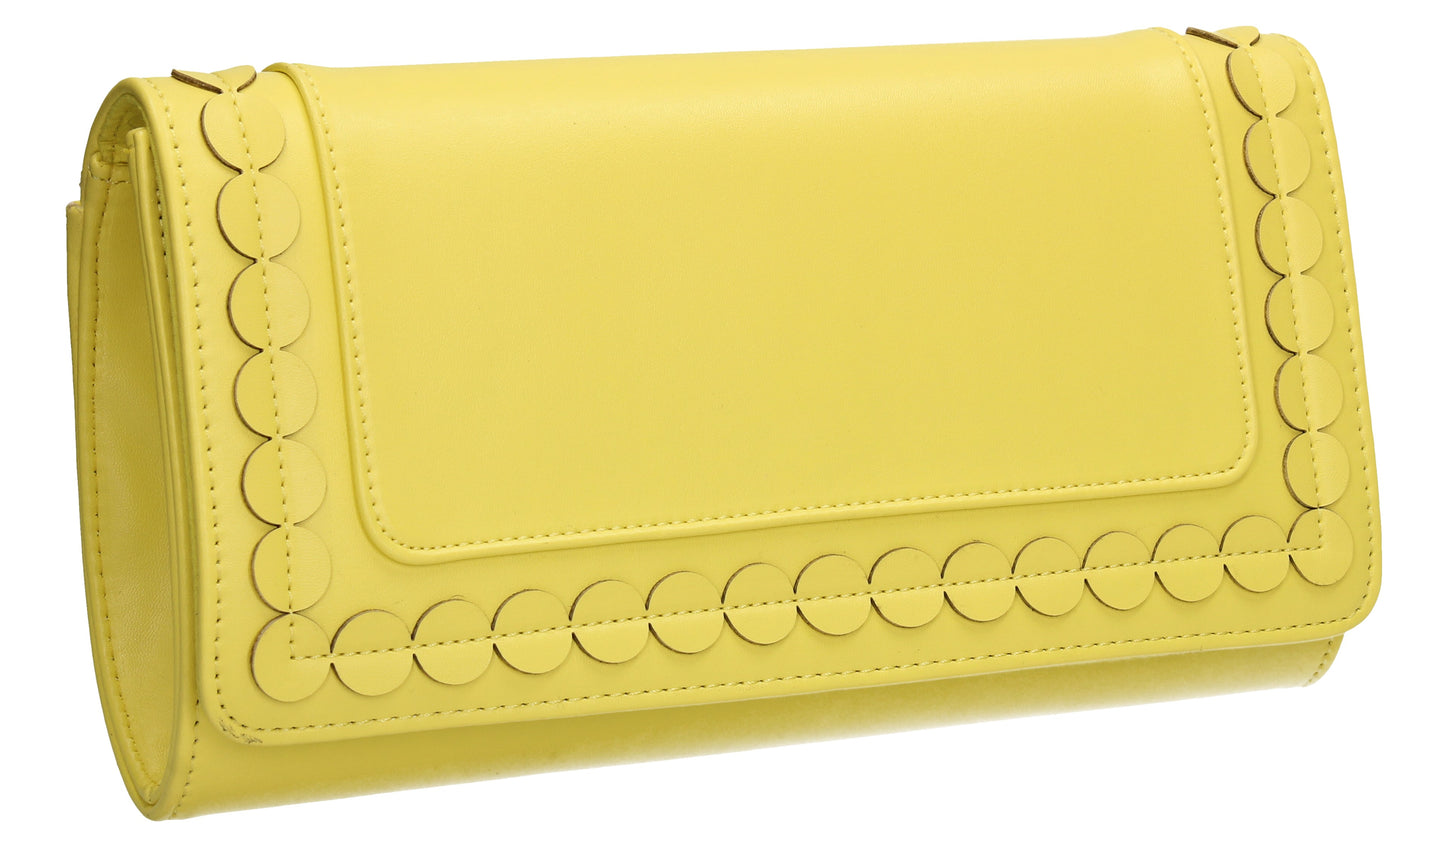 SWANKYSWANS Macy Clutch Bag Yellow Cute Cheap Clutch Bag For Weddings School and Work